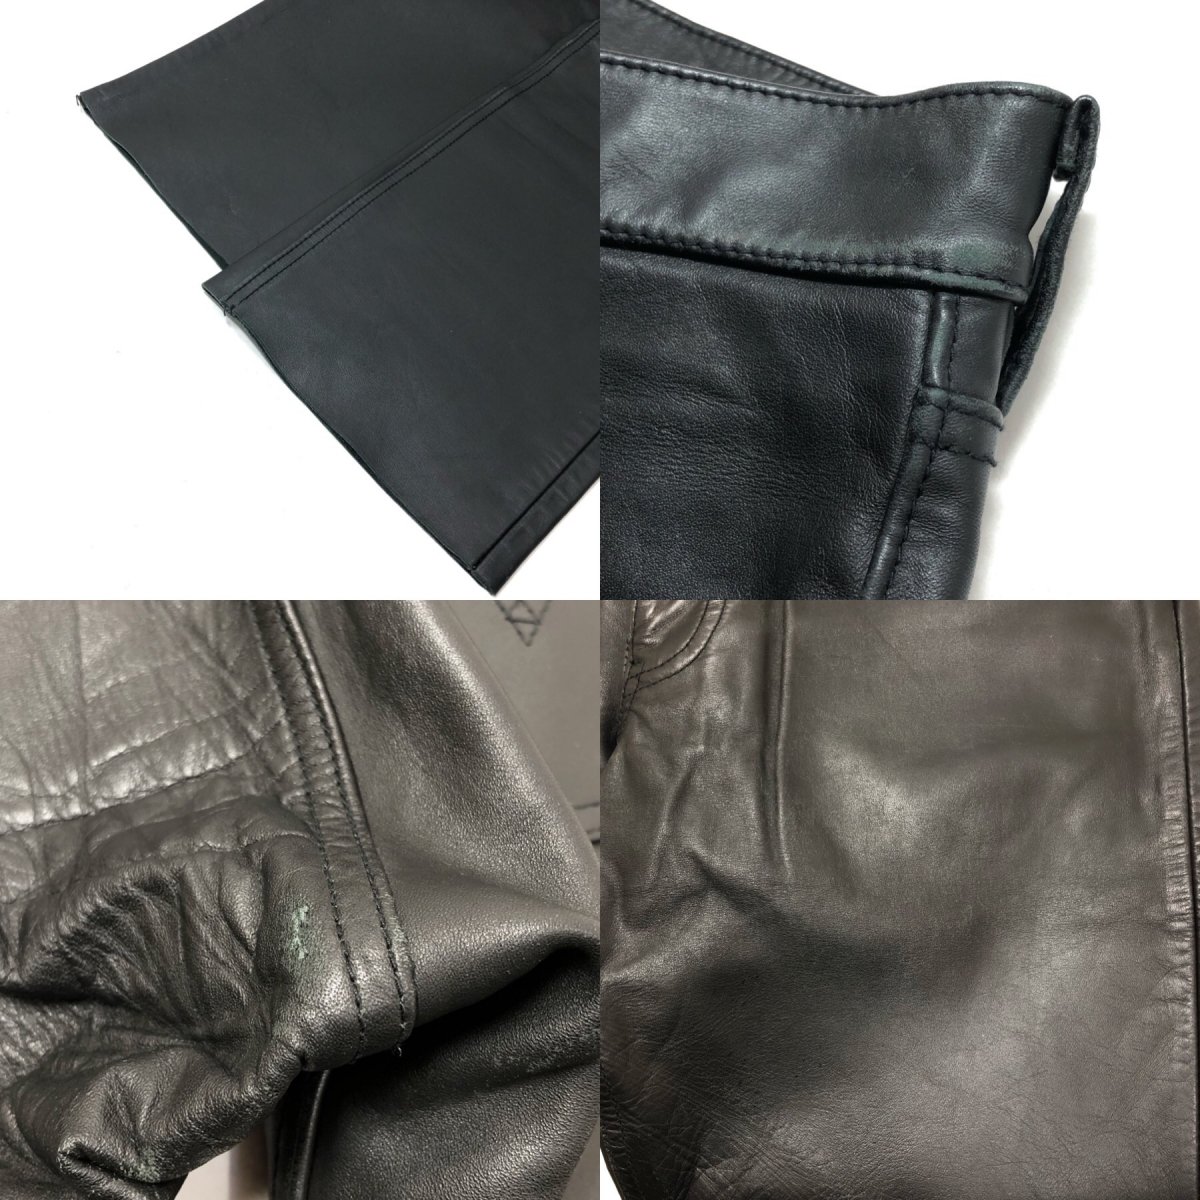 00s Levi's 505-4958 Horse Hide Black Leather Pants 黒 W32